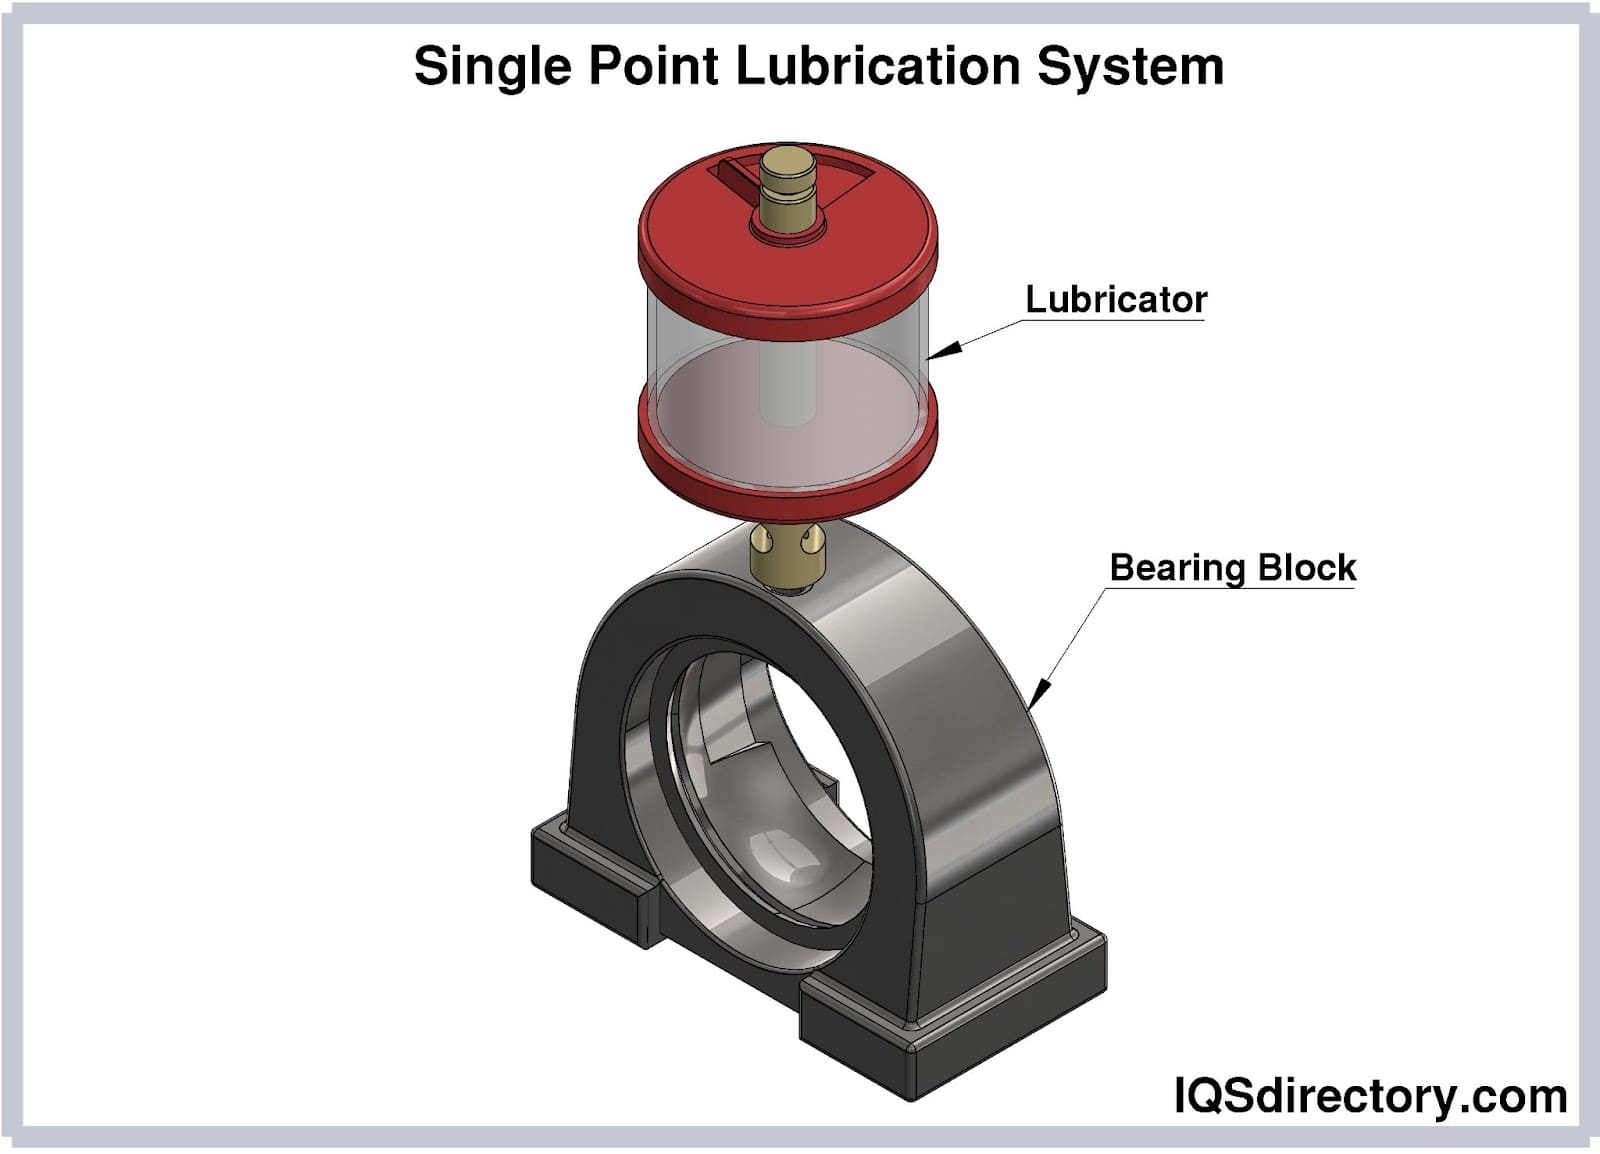 Singe Point Lubrication System